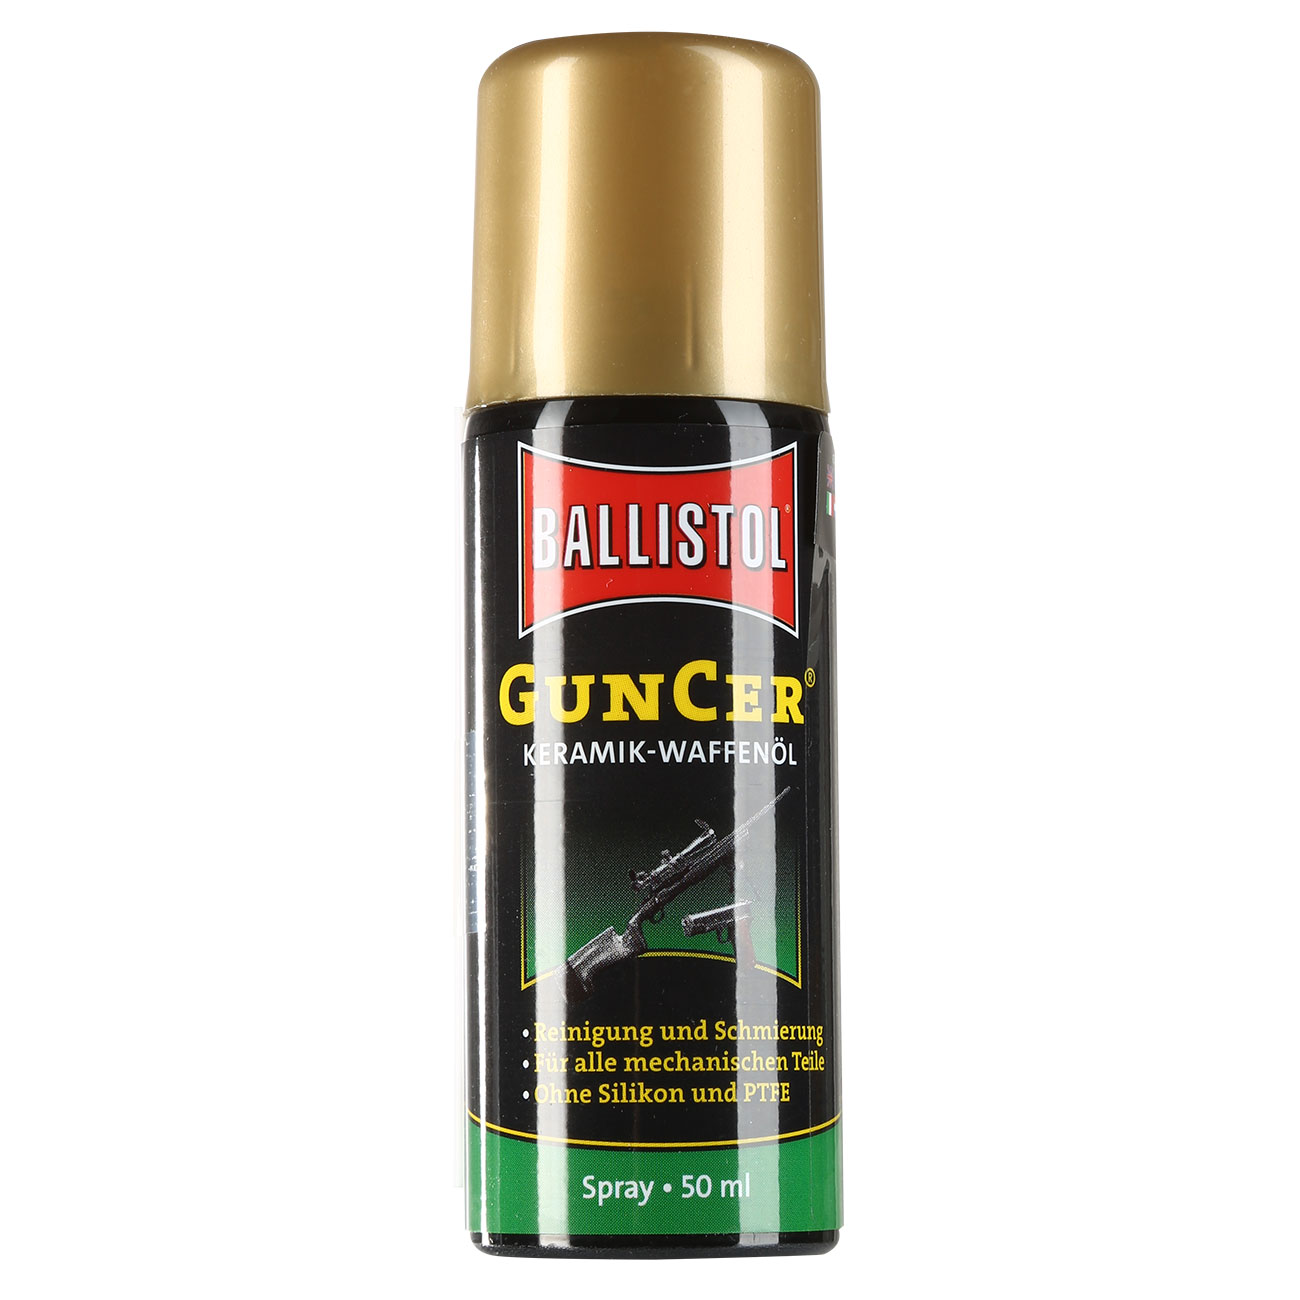 Ballistol GunCer Keramik Waffenl Spray 50 ml